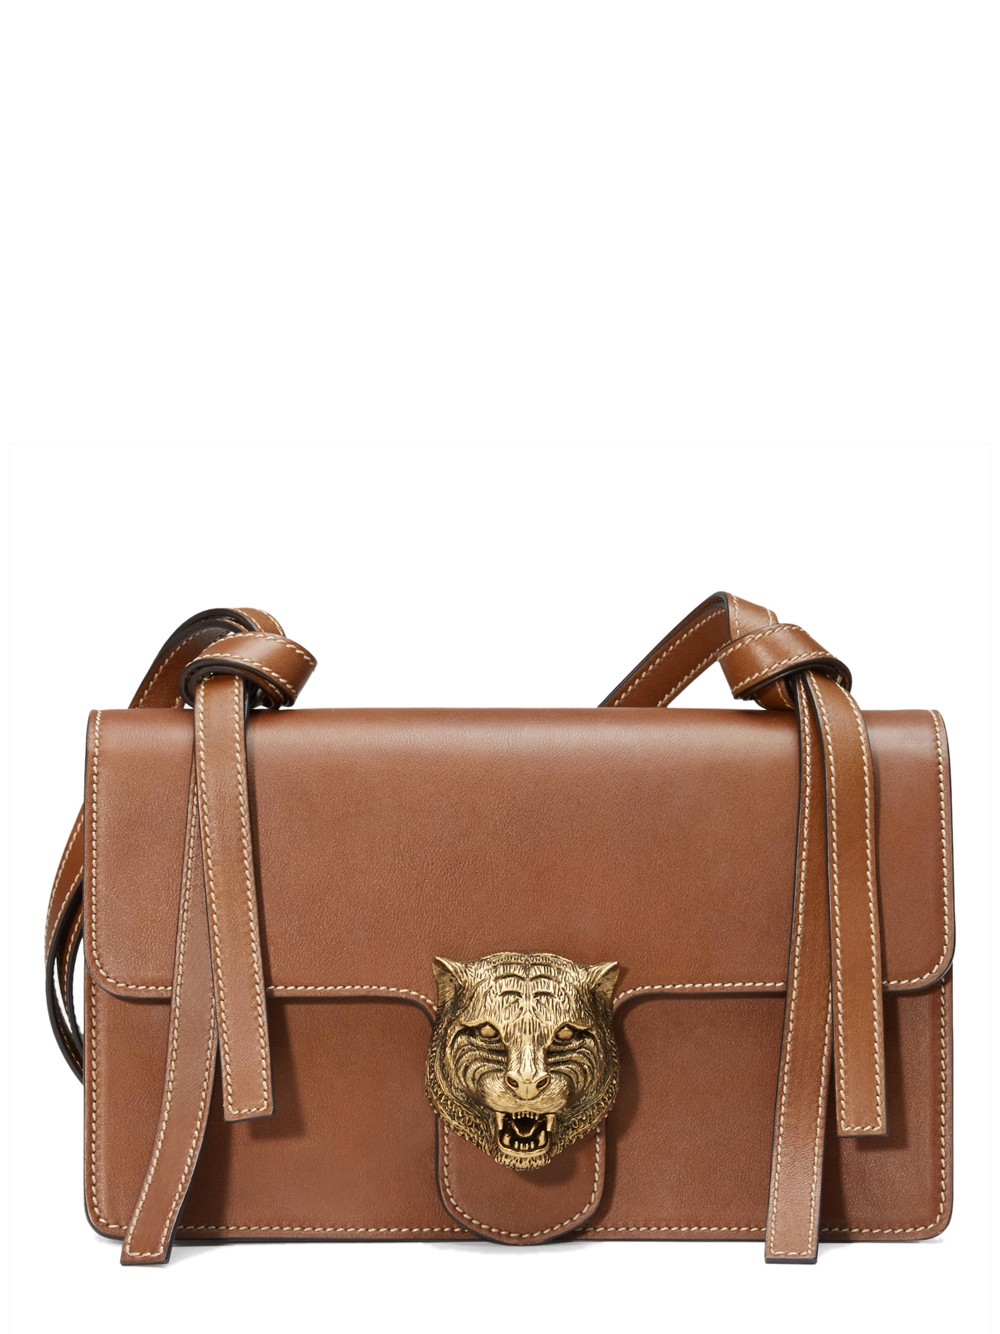 Lyst - Gucci Tiger Lock Shoulder Bag in Brown